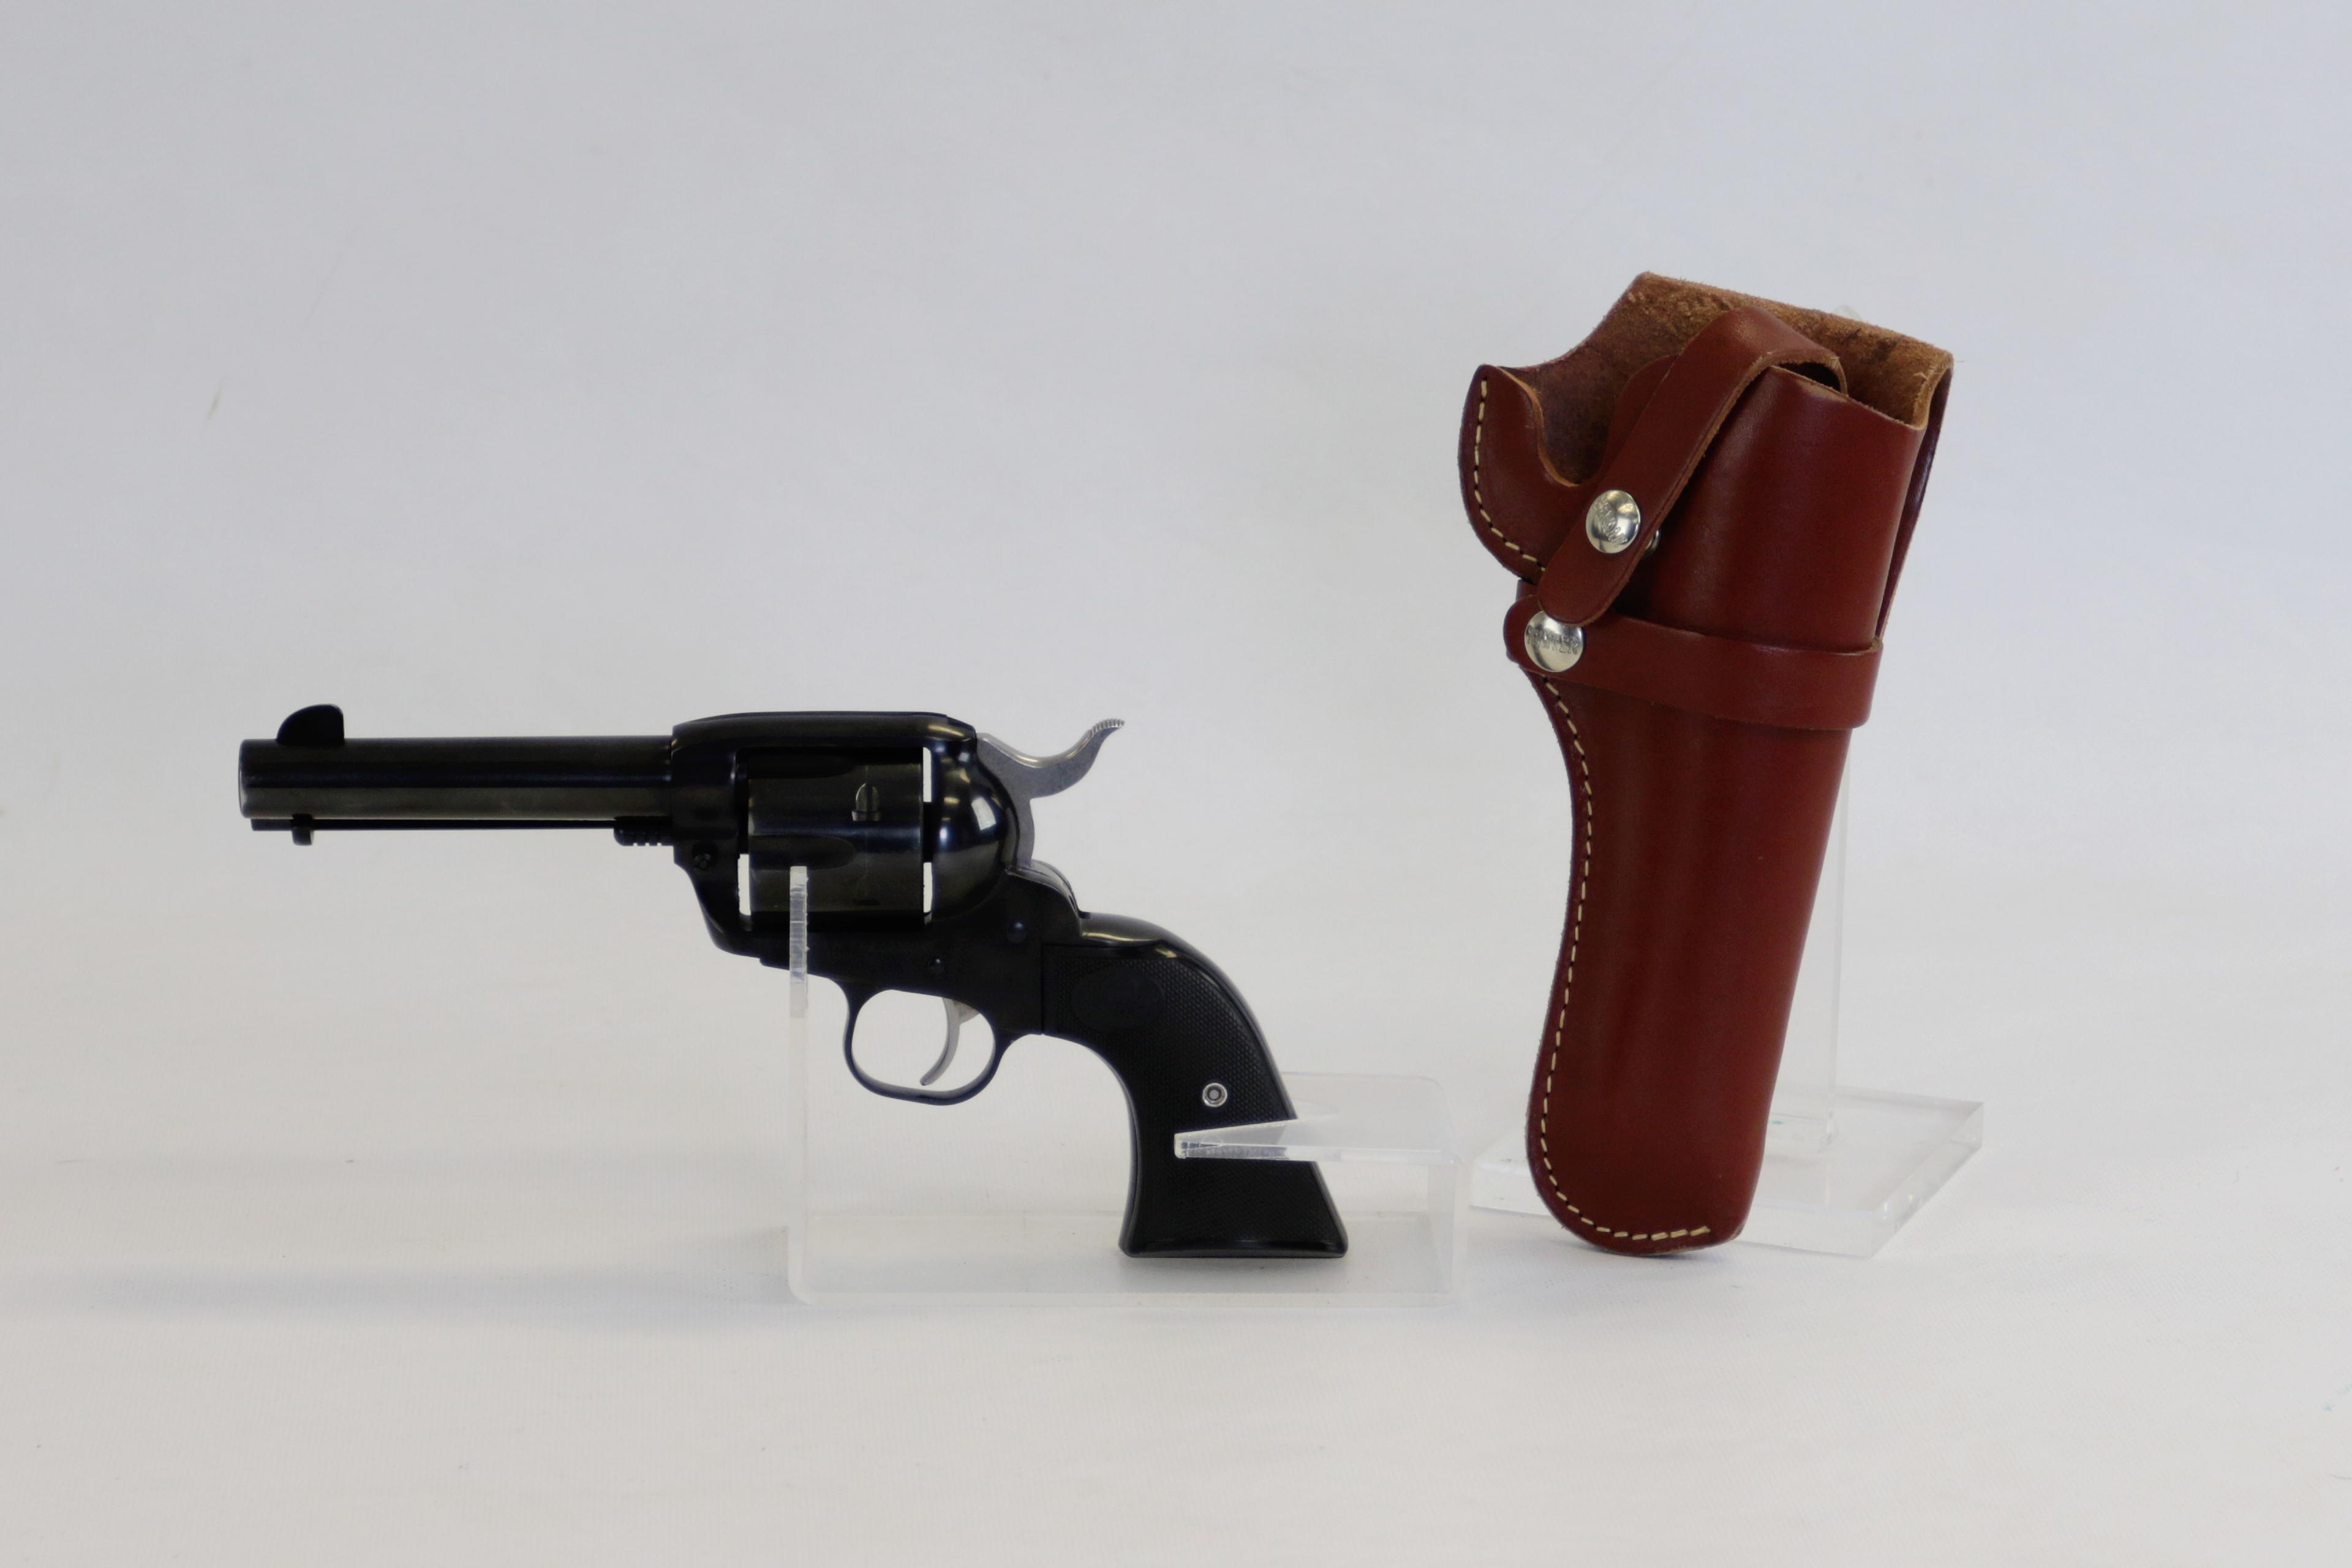 Ruger New Vaquero 357 magnum revolver